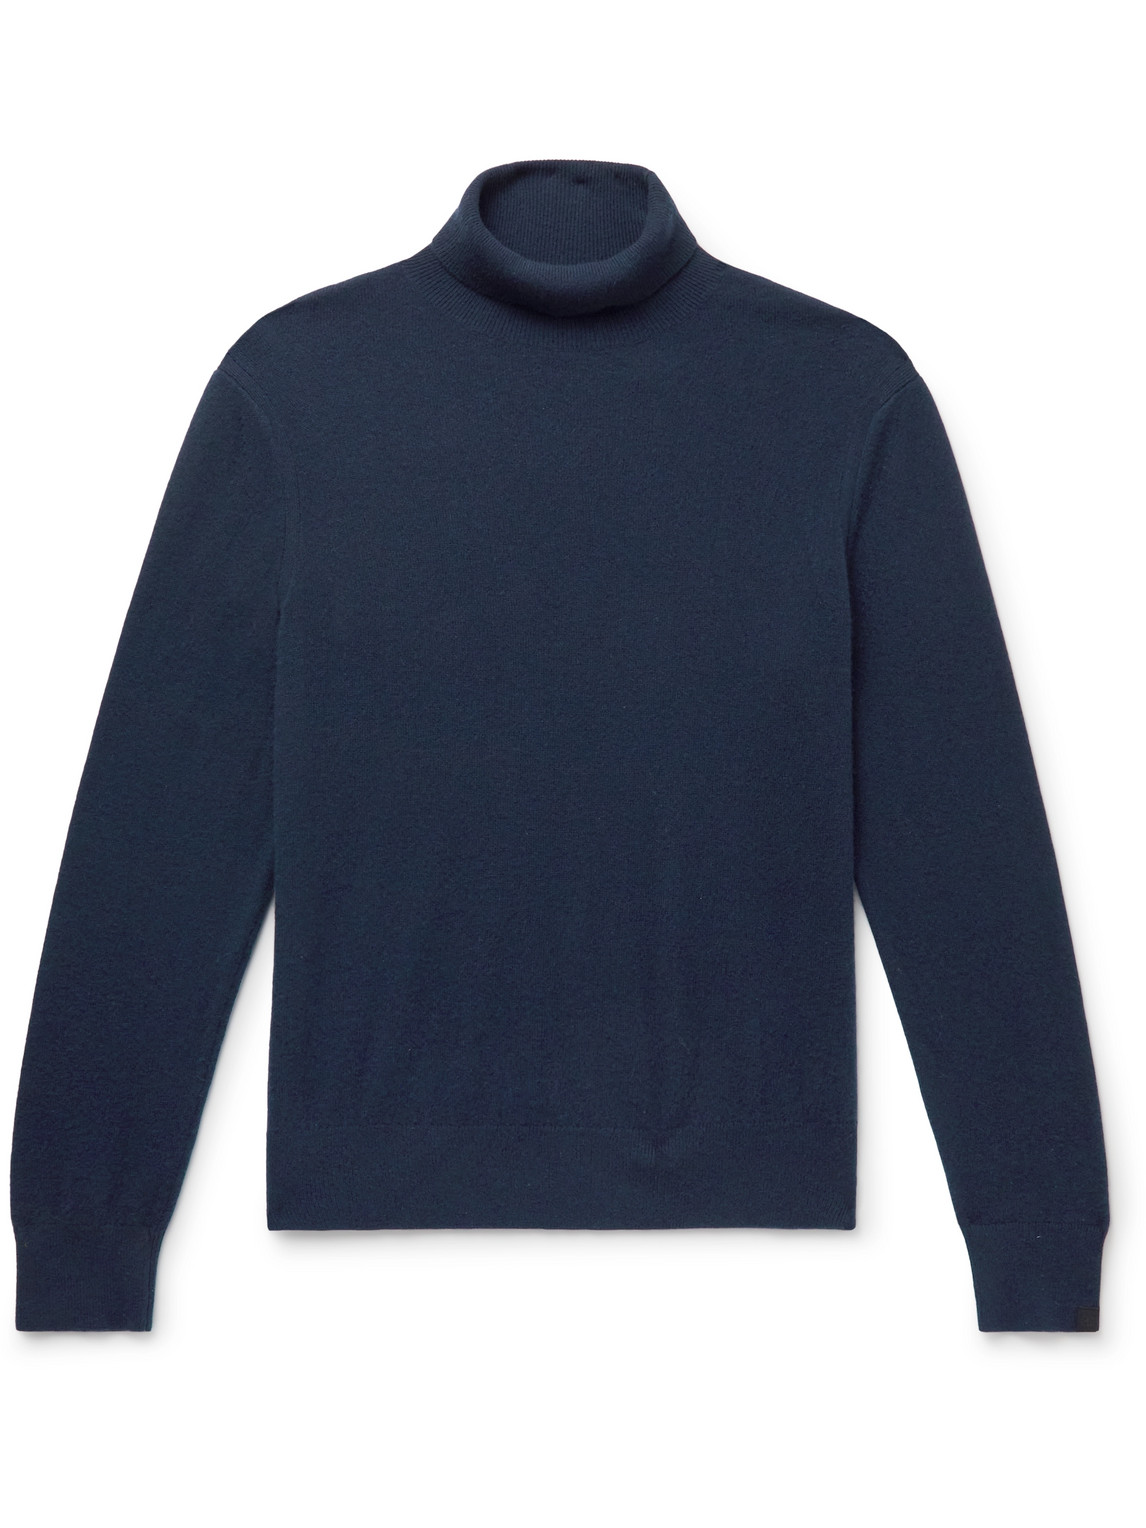 Harding Cashmere Rollneck Sweater